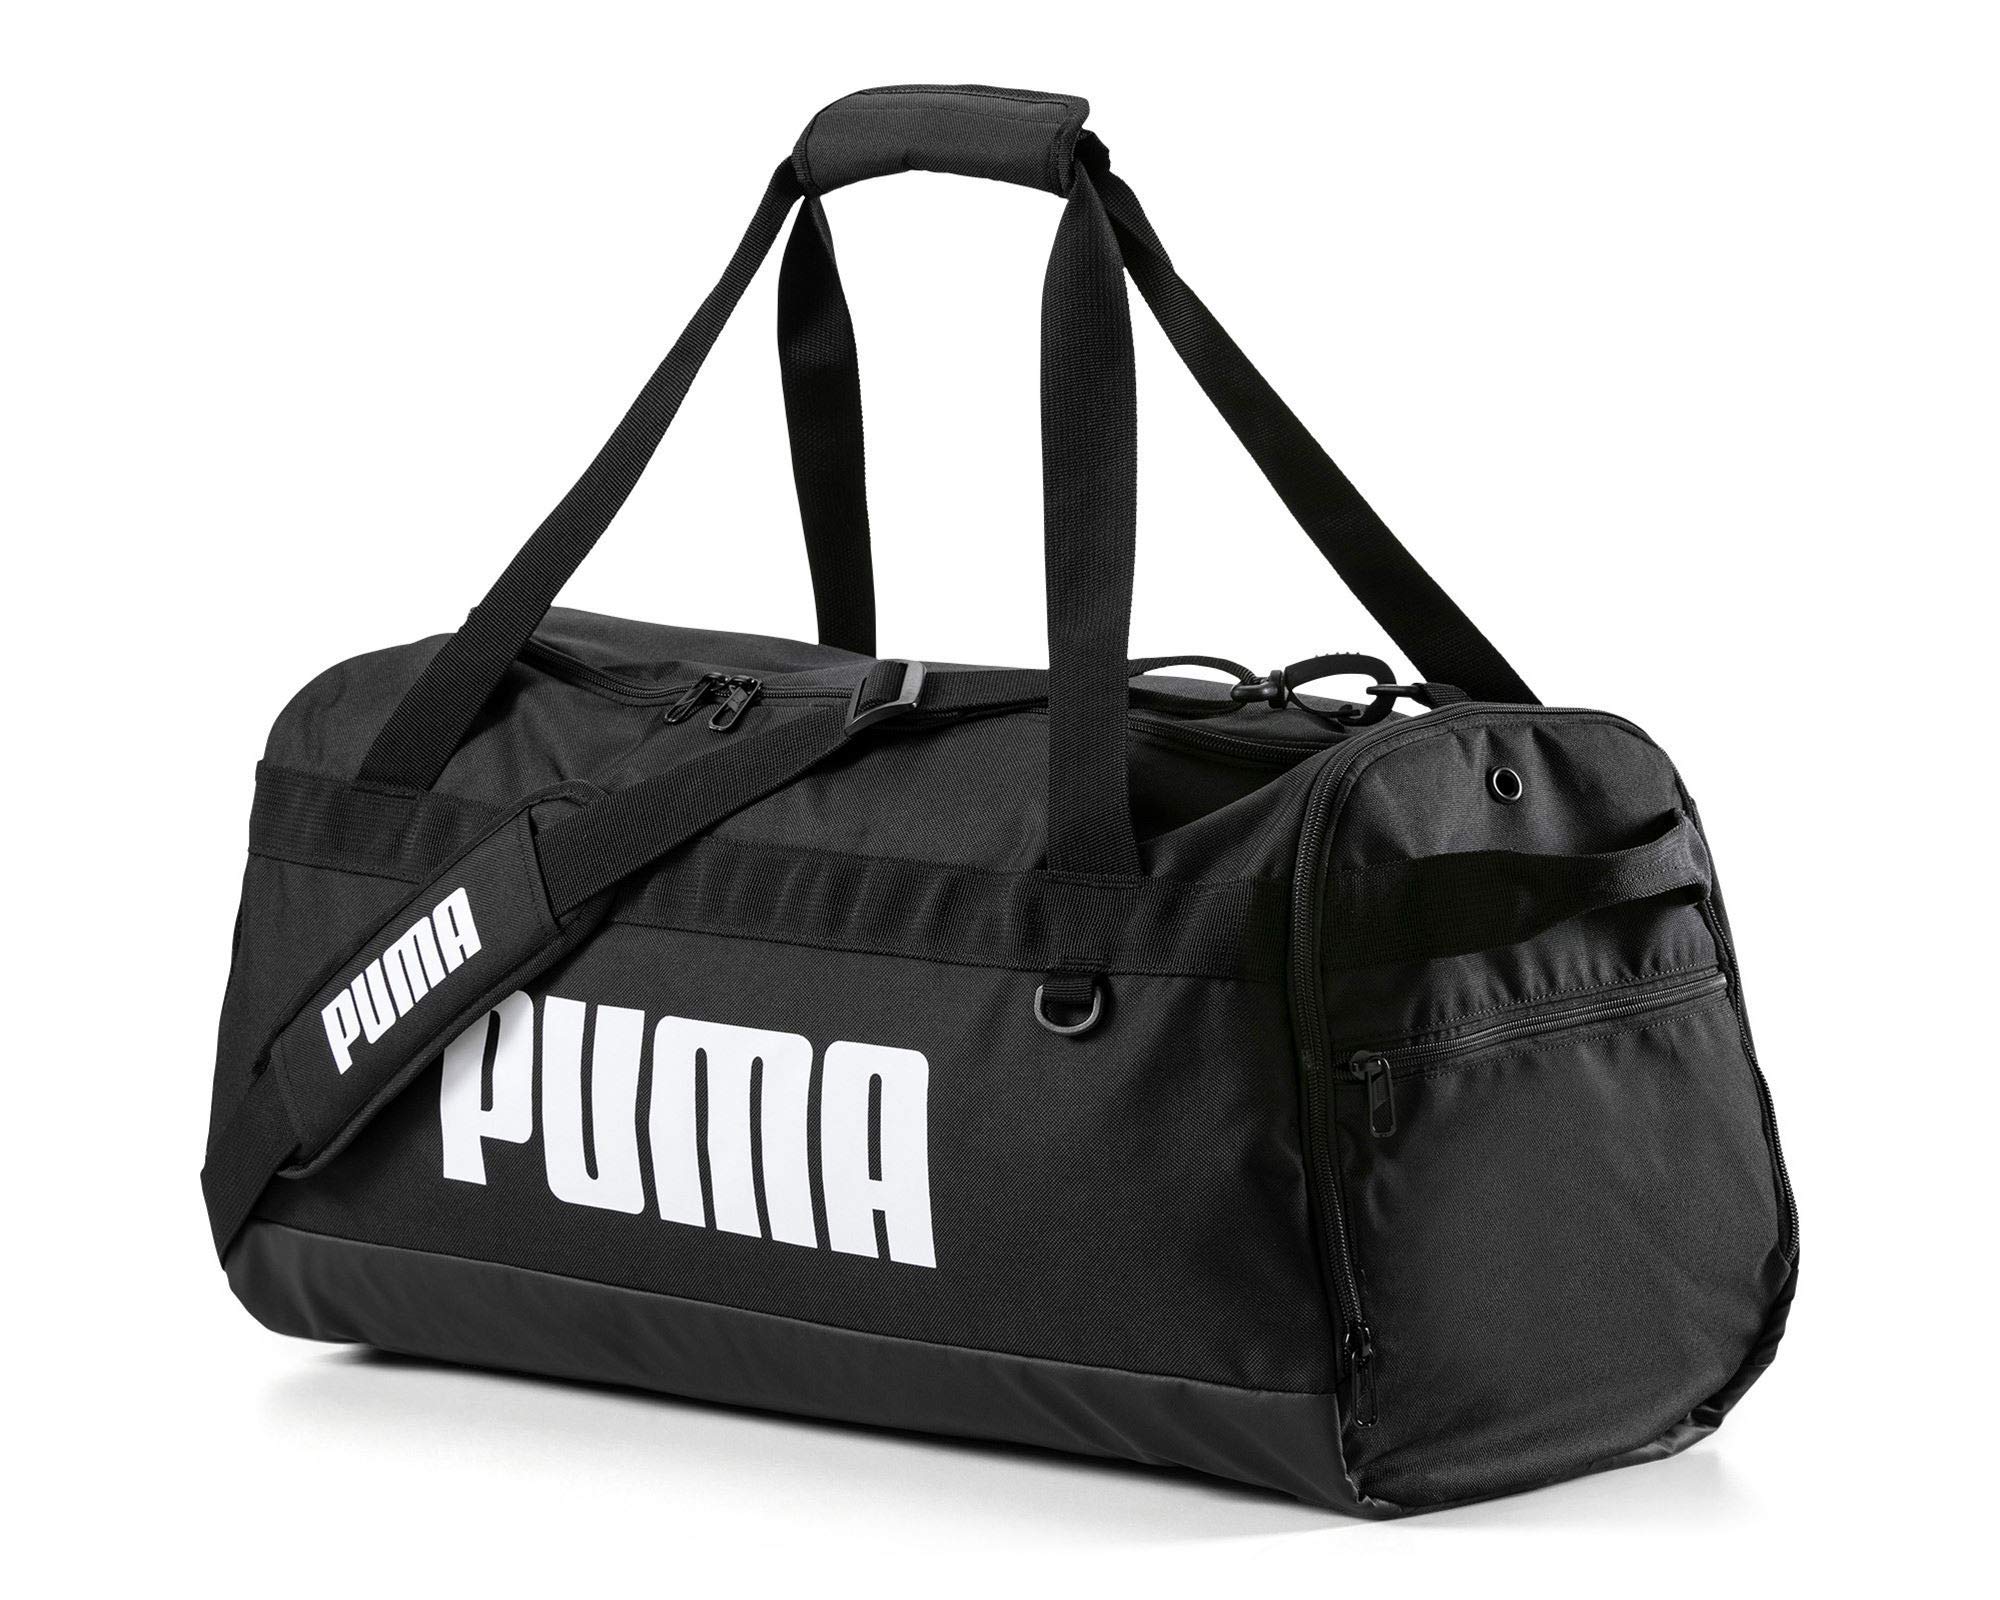 PUMA Unisex – Erwachsene Challenger Duffel Bag M Sporttasche, Black, OSFA